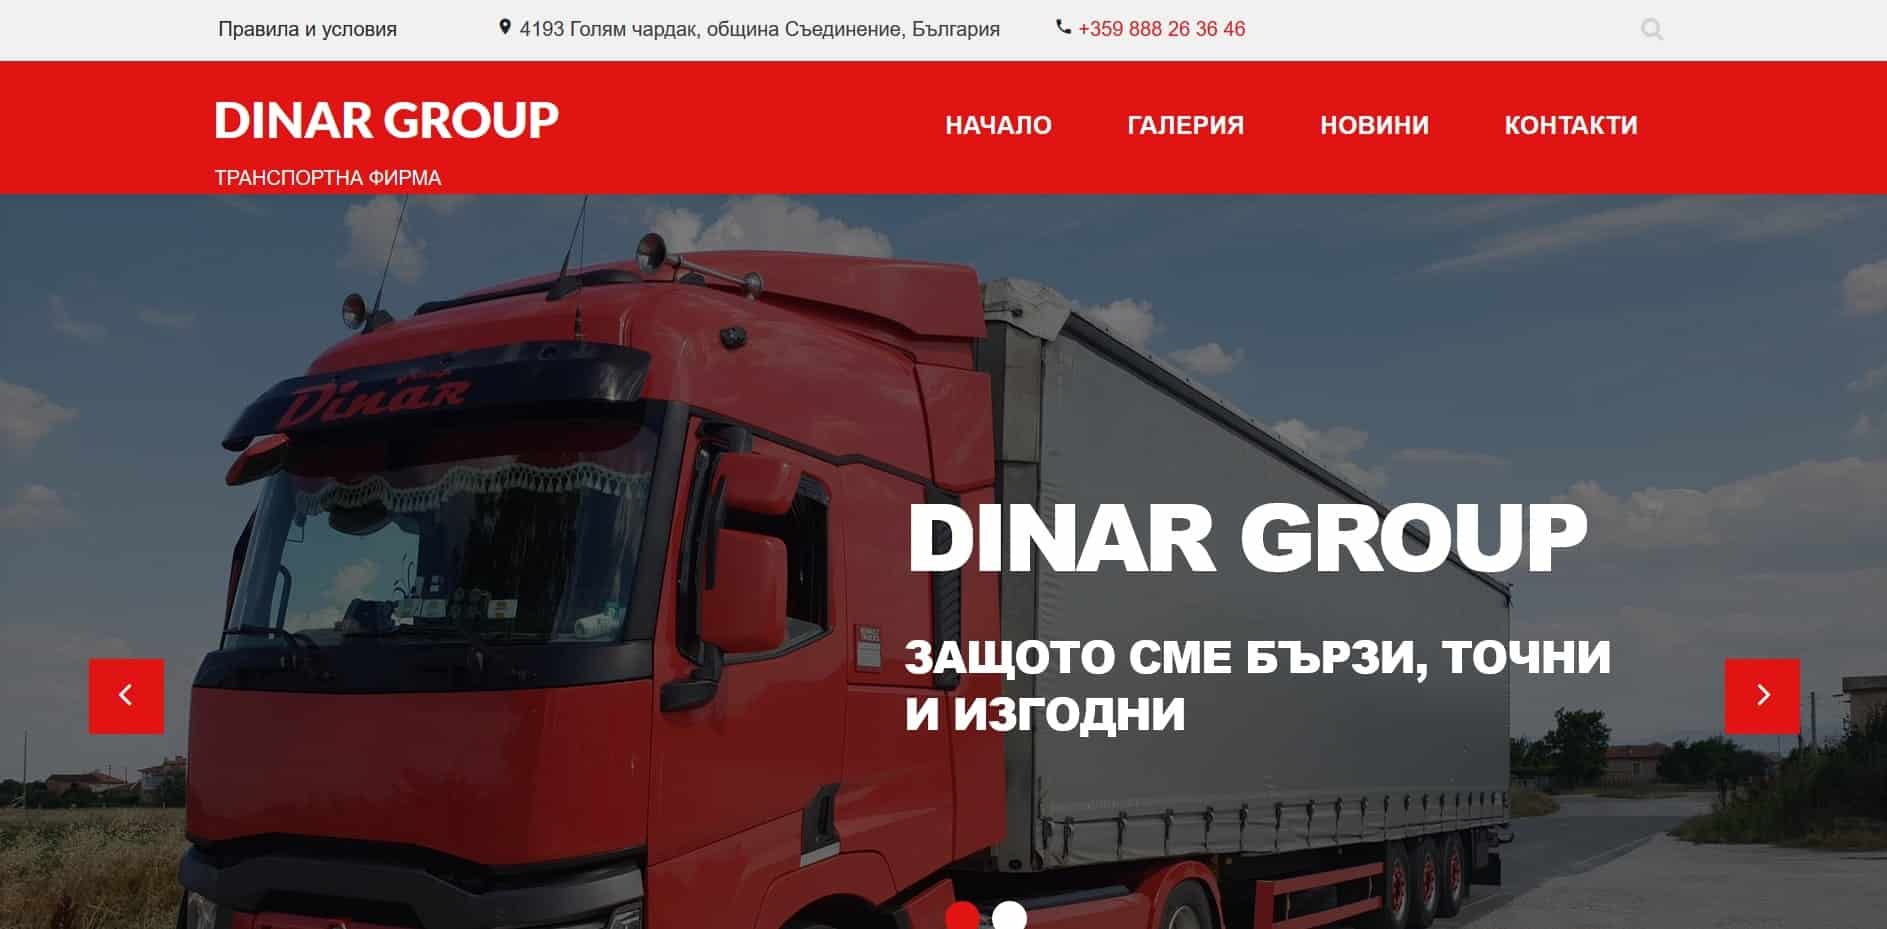 Dinar Goup - Transport company